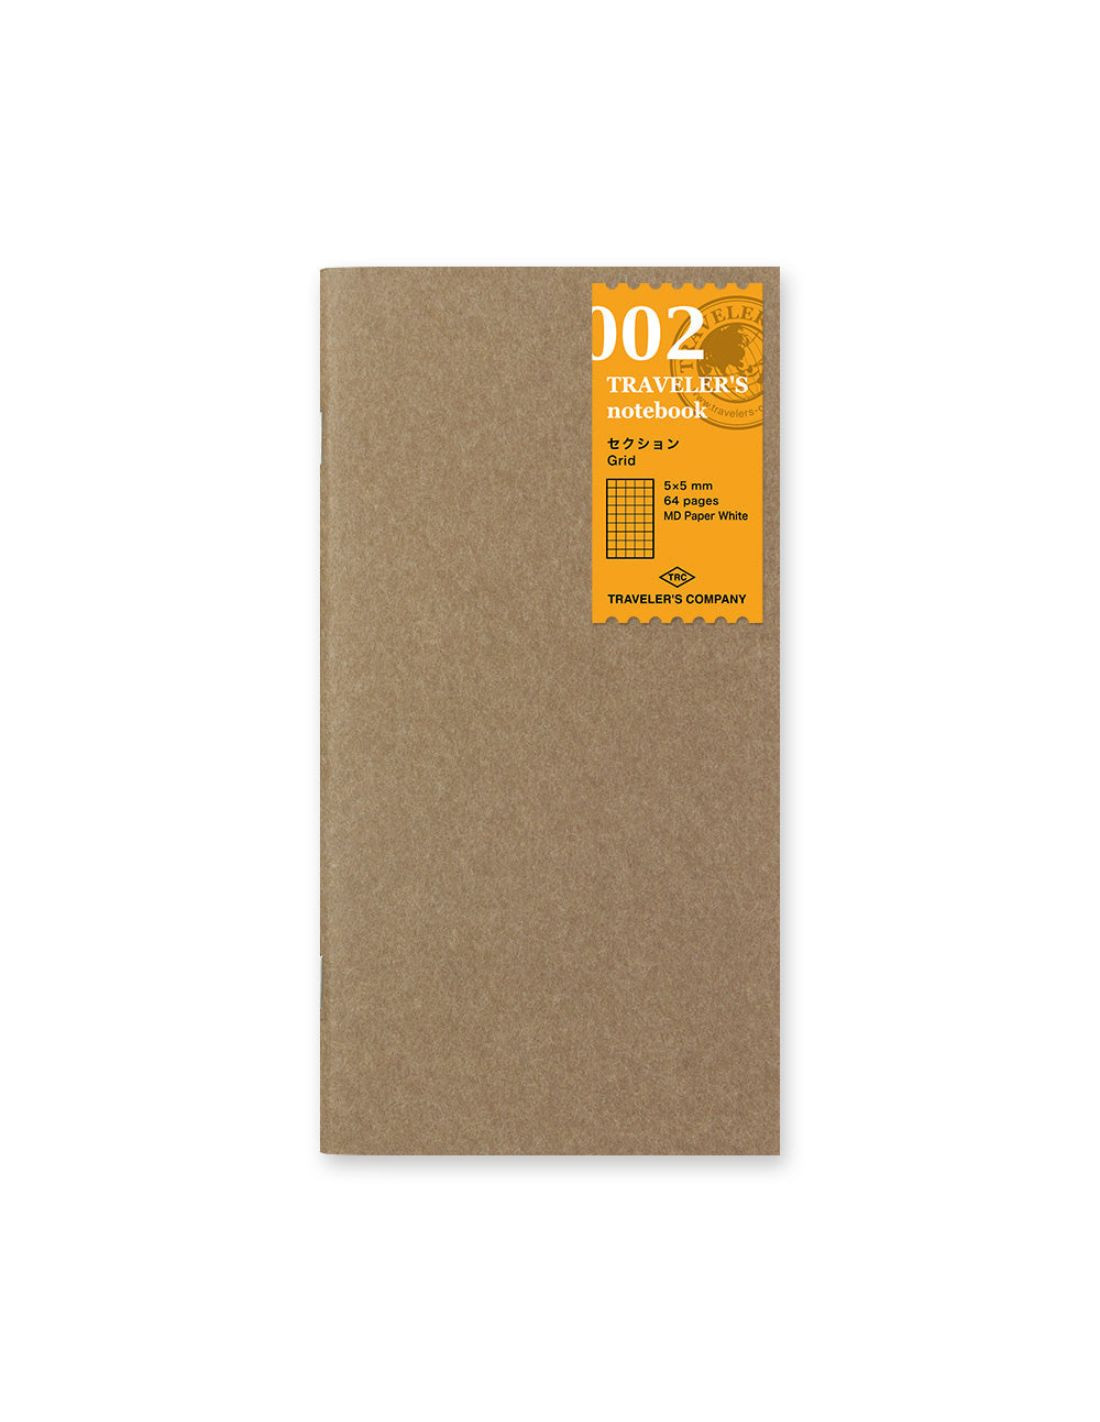 Refill 002 Grid Notebook - TRAVELER'S notebook